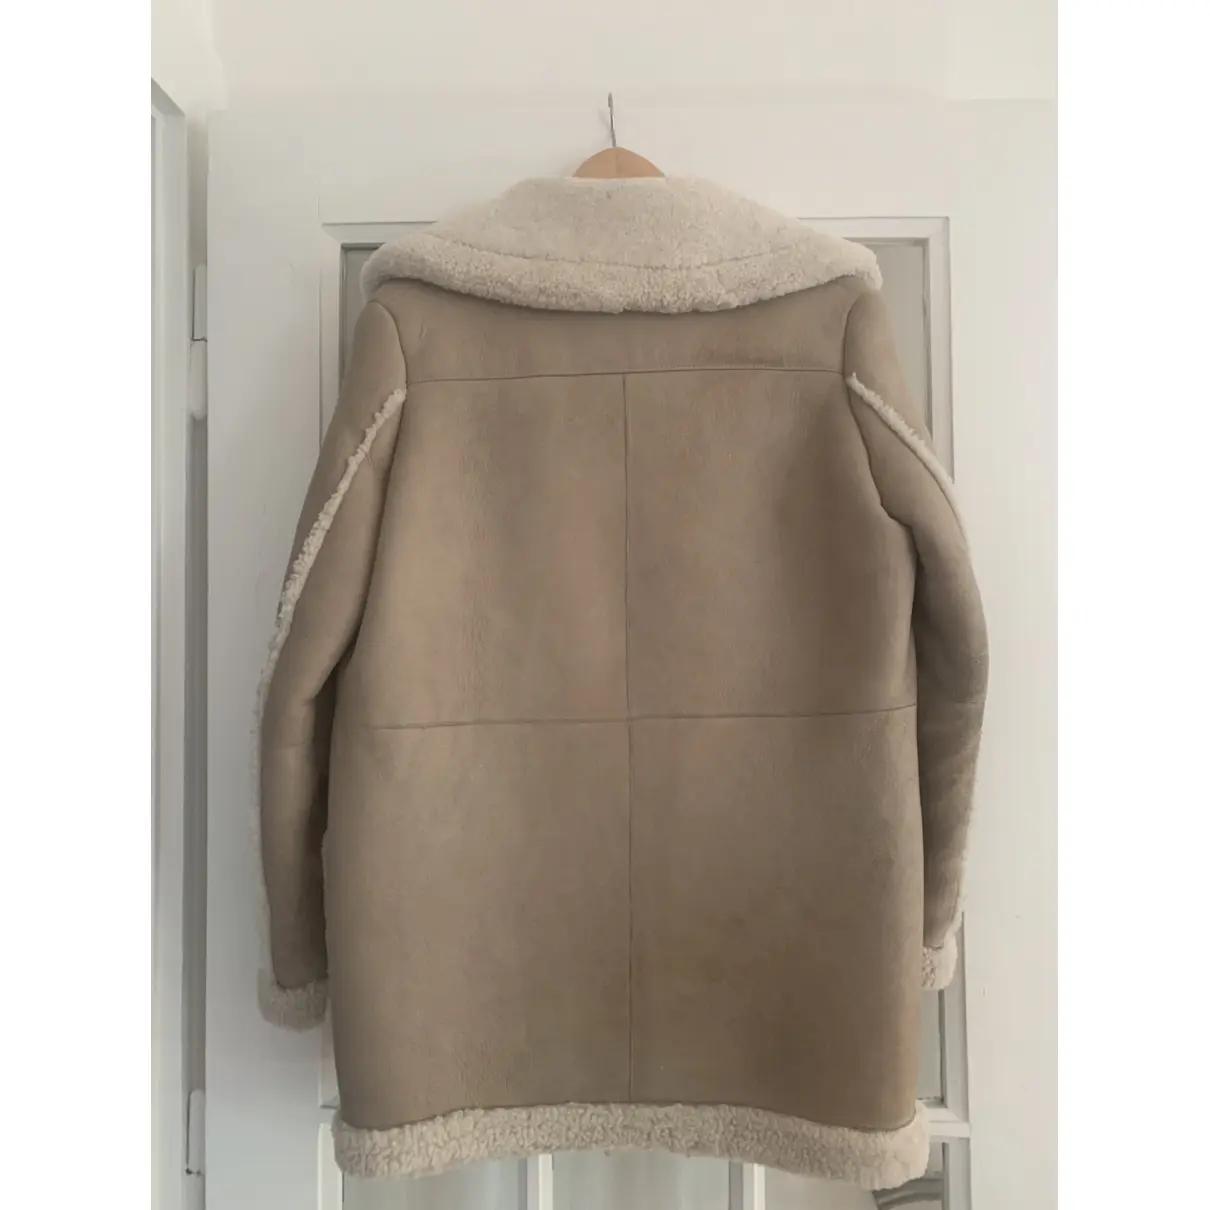 Buy Maje Fall Winter 2019 leather coat online